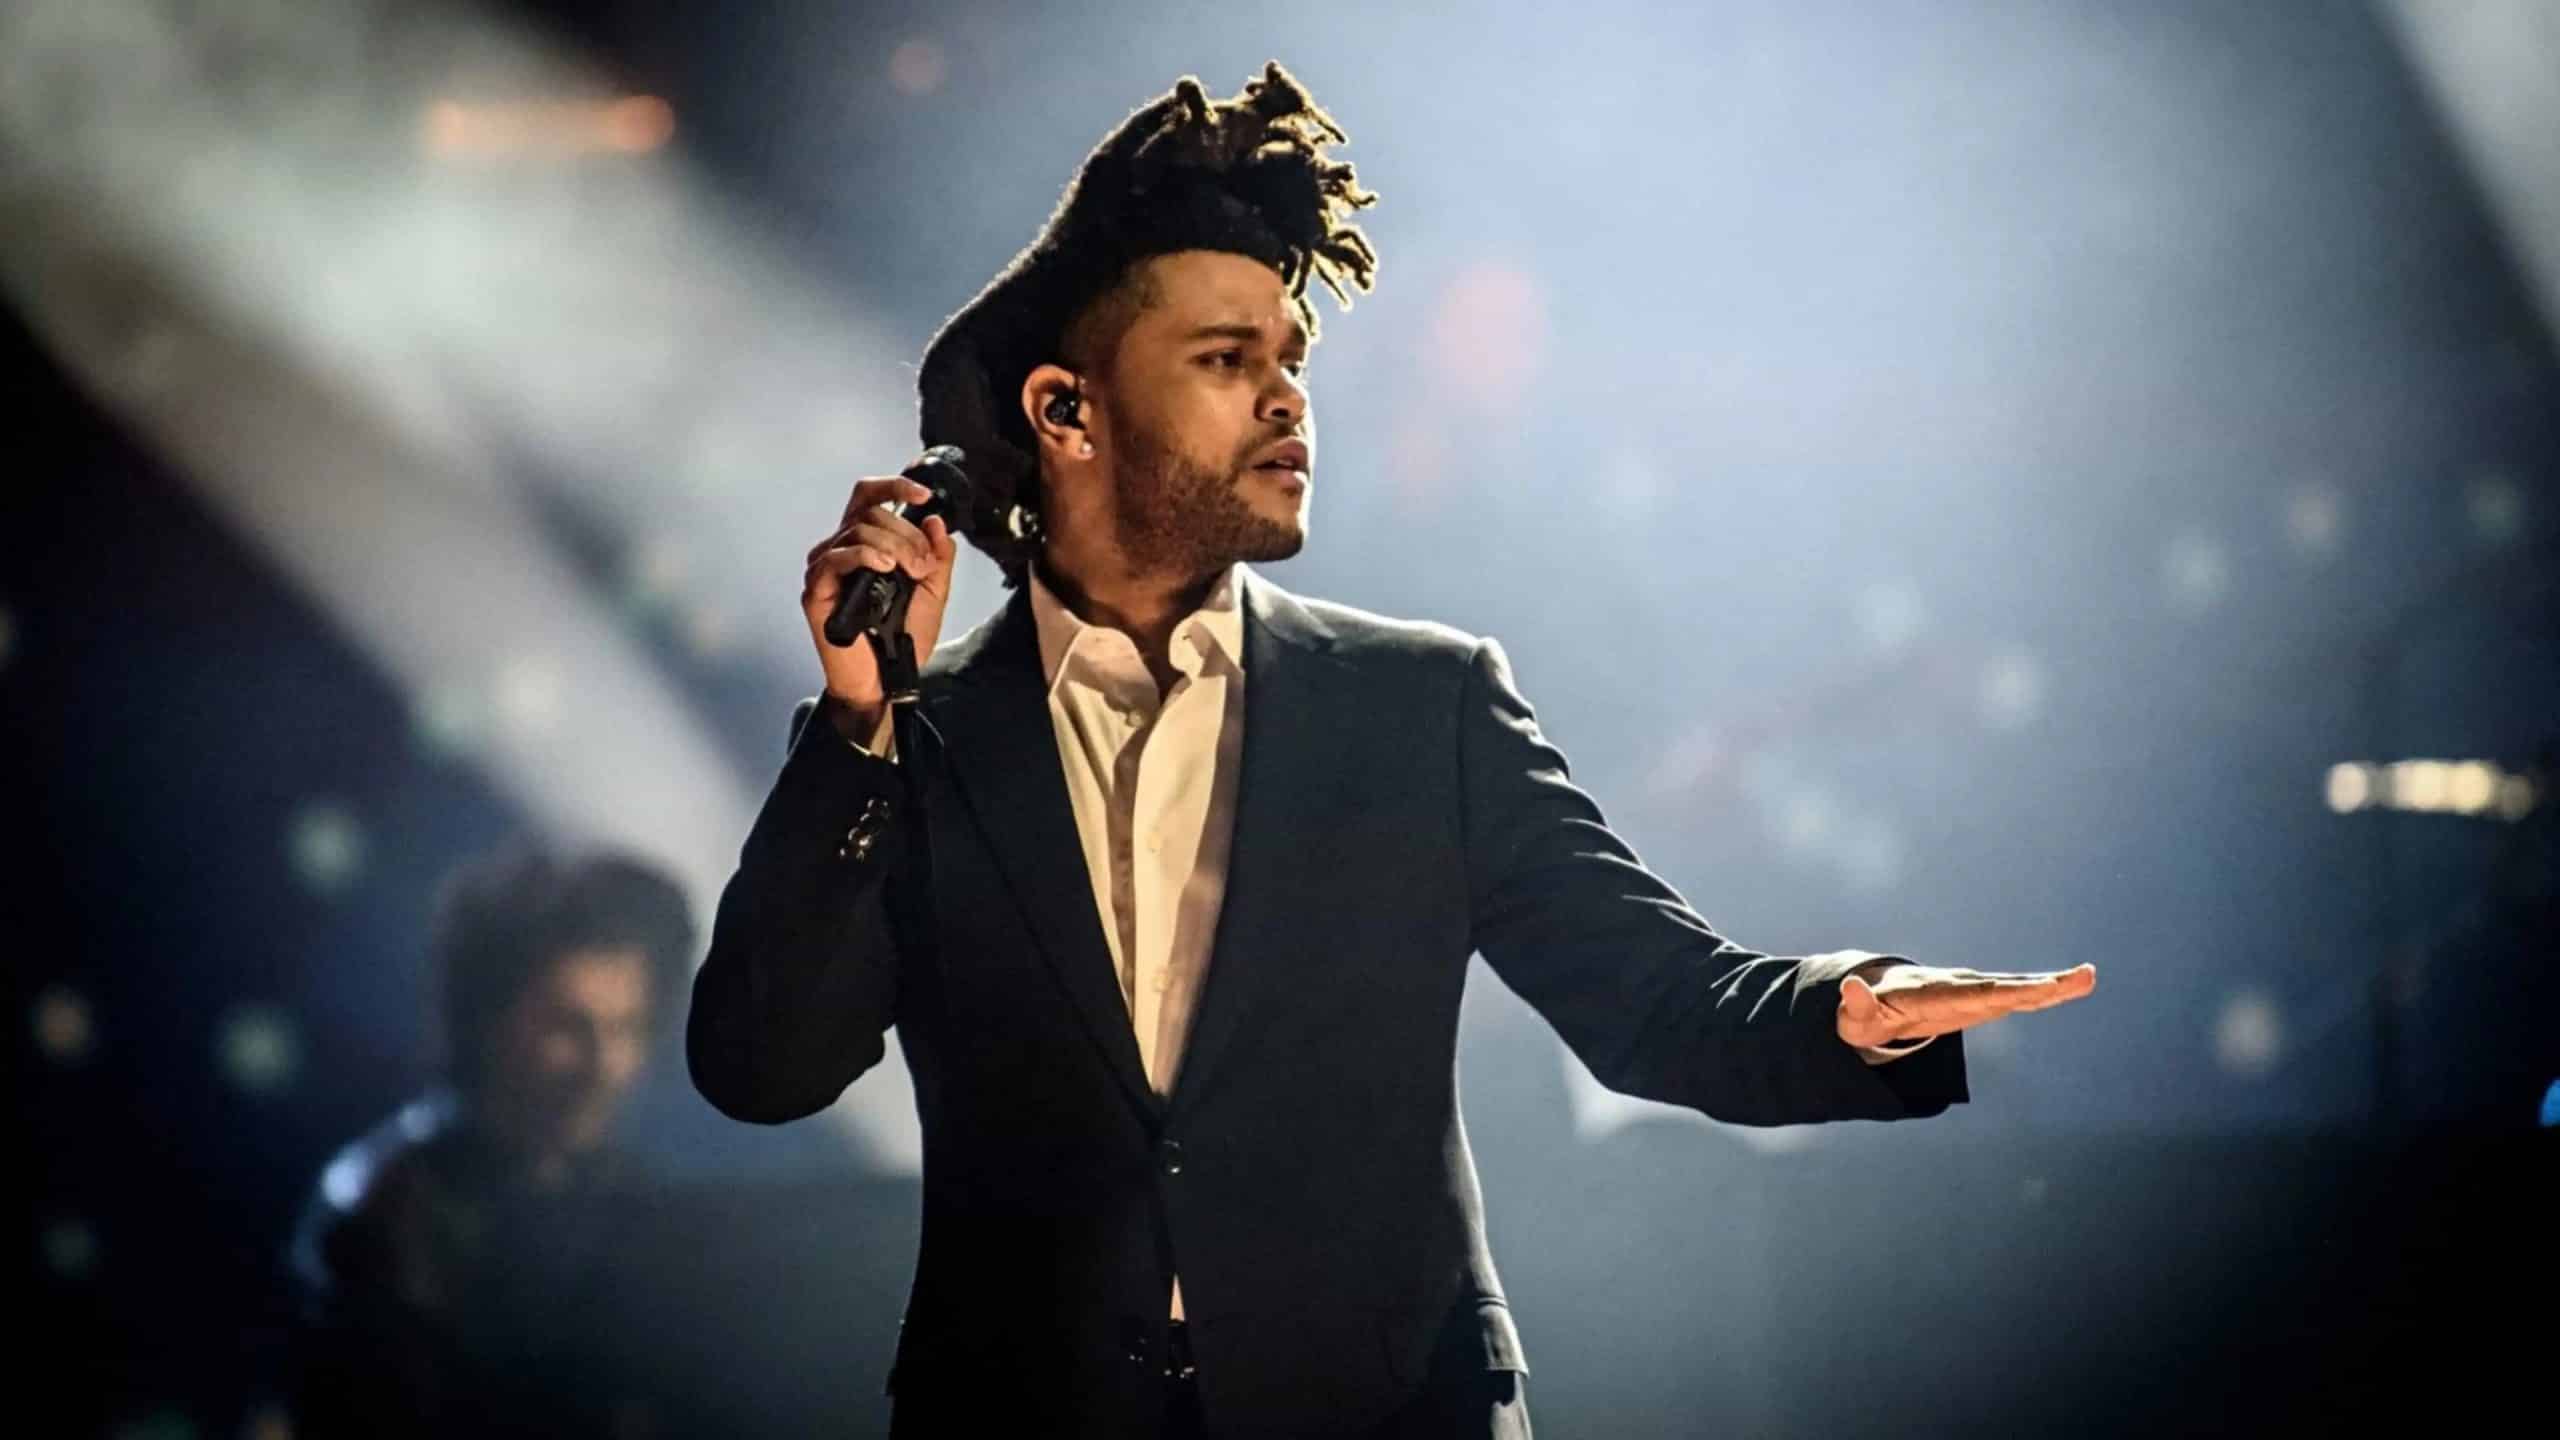 Музыка новый международный. The Weeknd 2022. Певец де викенд. The Weeknd фото. Канадский певец.